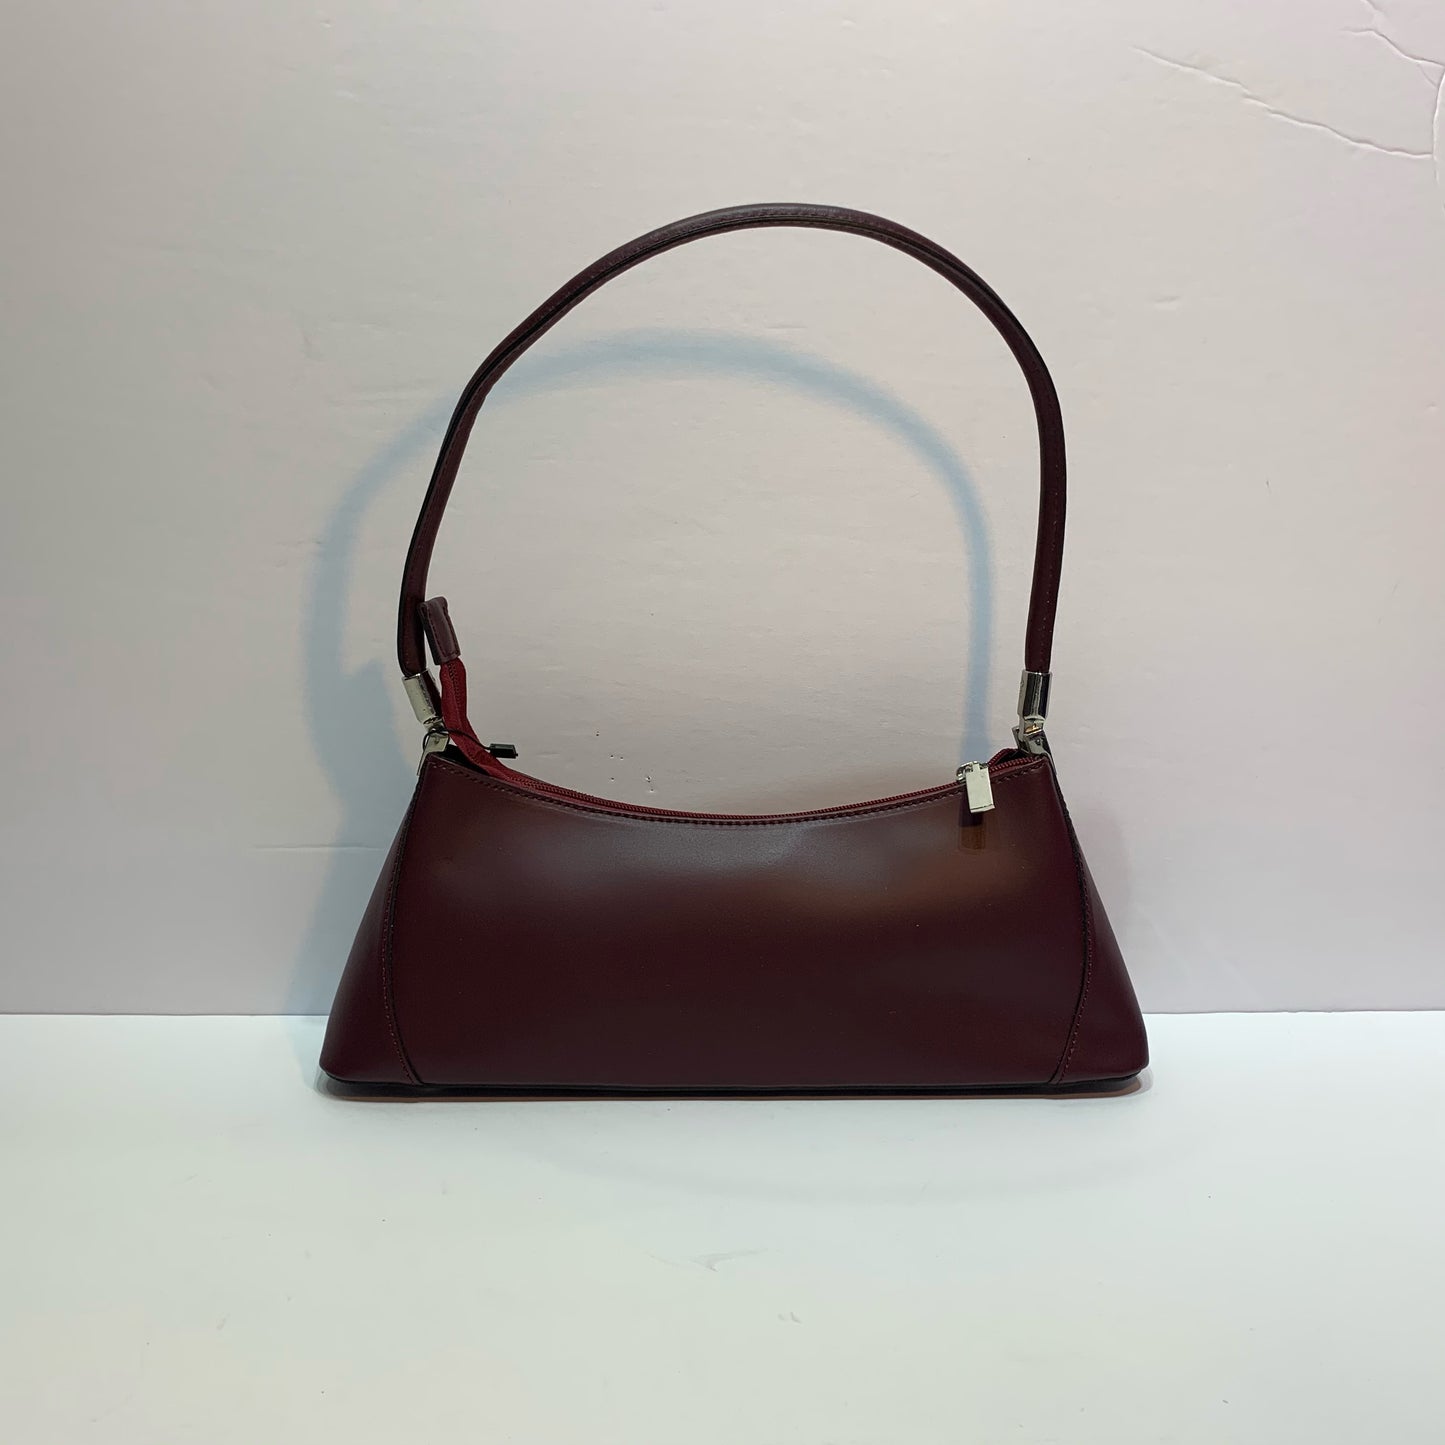 Small evening handbag in Italian Leather